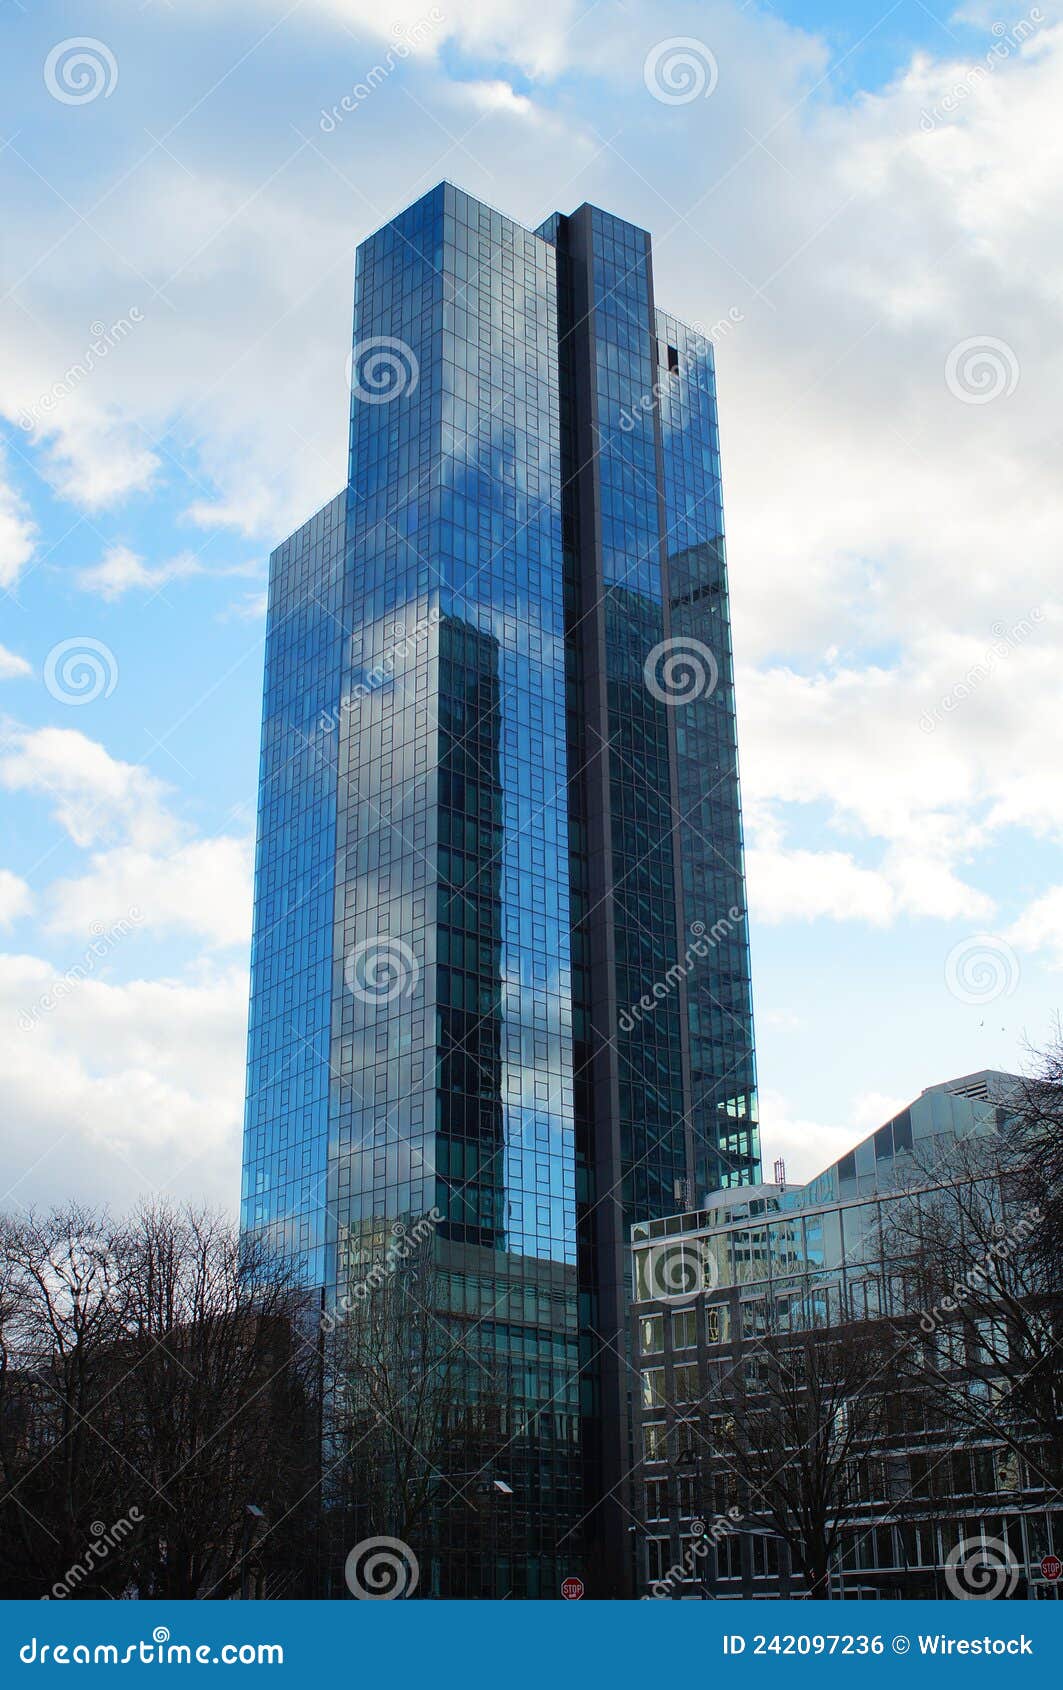 The Gallileo Tower in Frankfurt Editorial Photo - Image of main ...